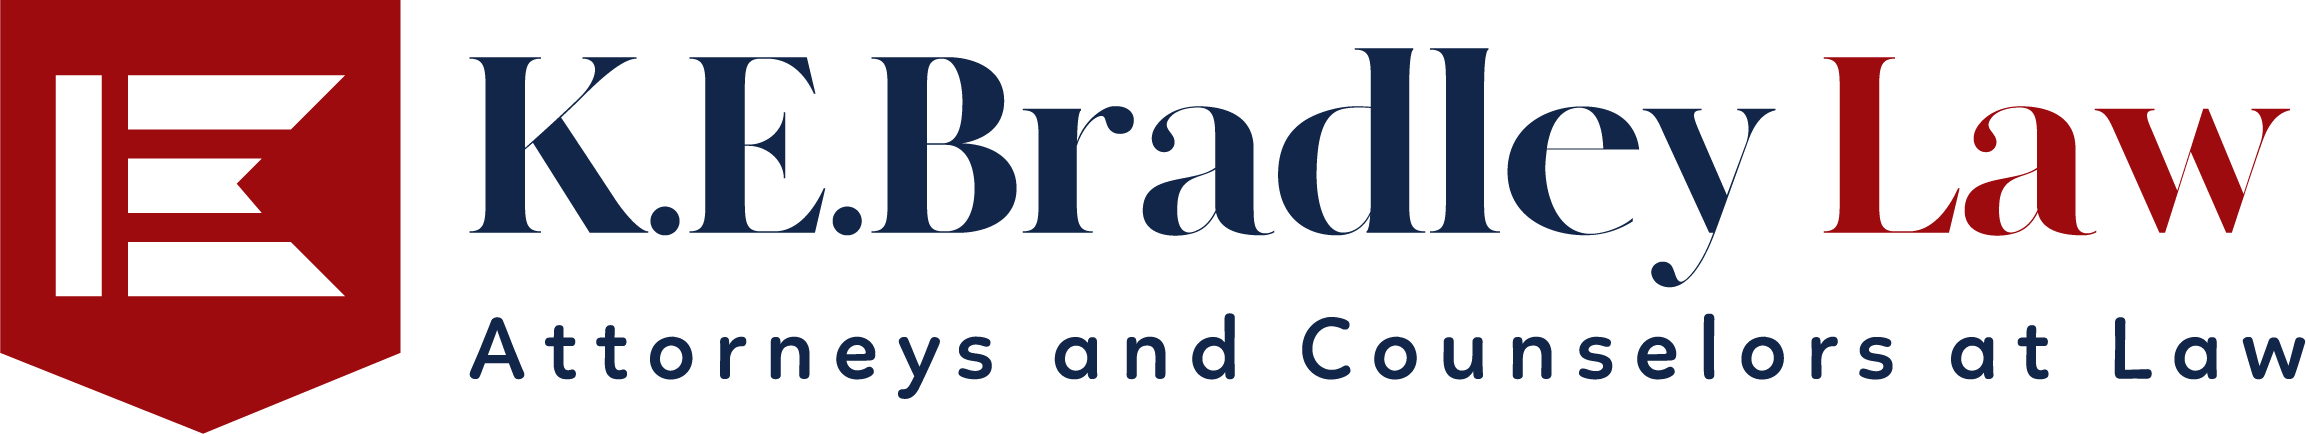 K. E. Bradley Law Attorneys & Counselors at Law, PLLC Logo